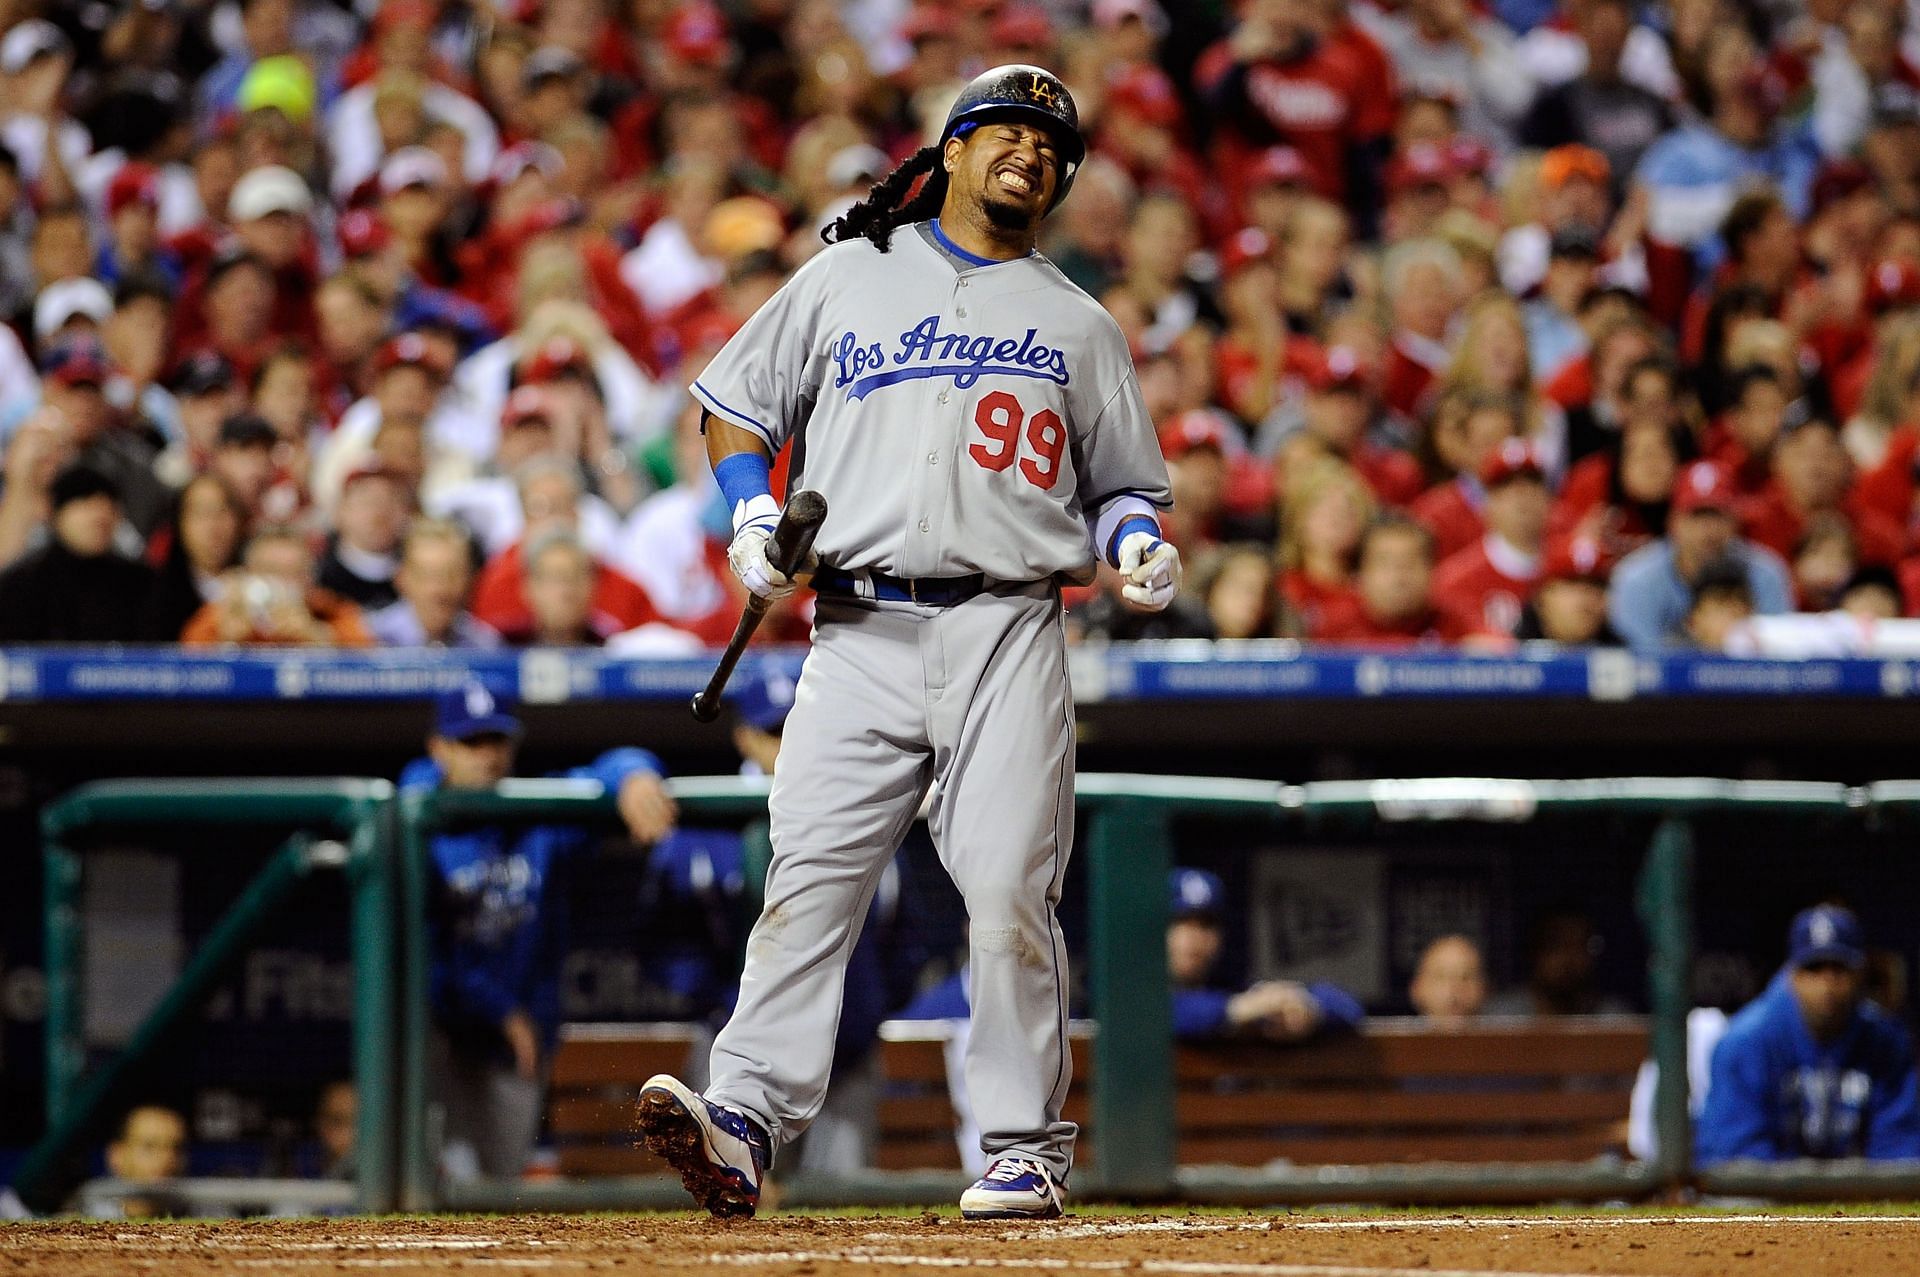 MLB rumors: Ex-Red Sox slugger Manny Ramirez is (kind of) making a